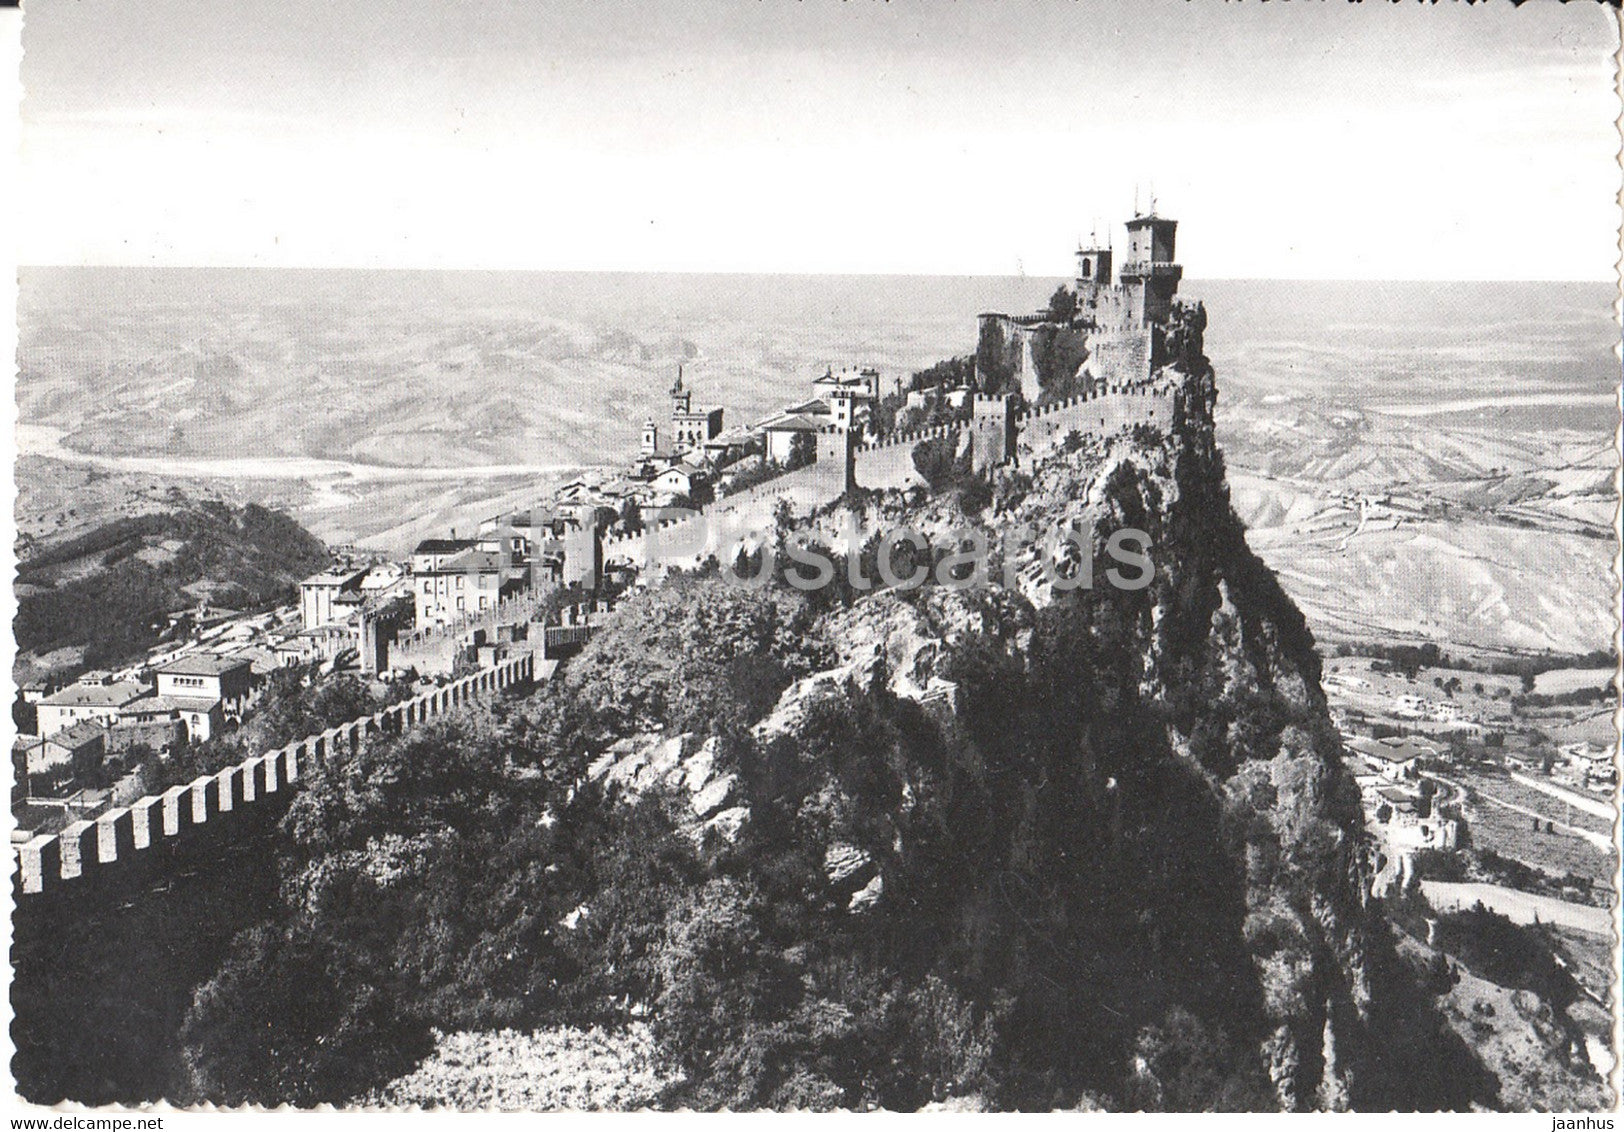 Repubblica di San Marino - Panorama - San Marino - unused - JH Postcards